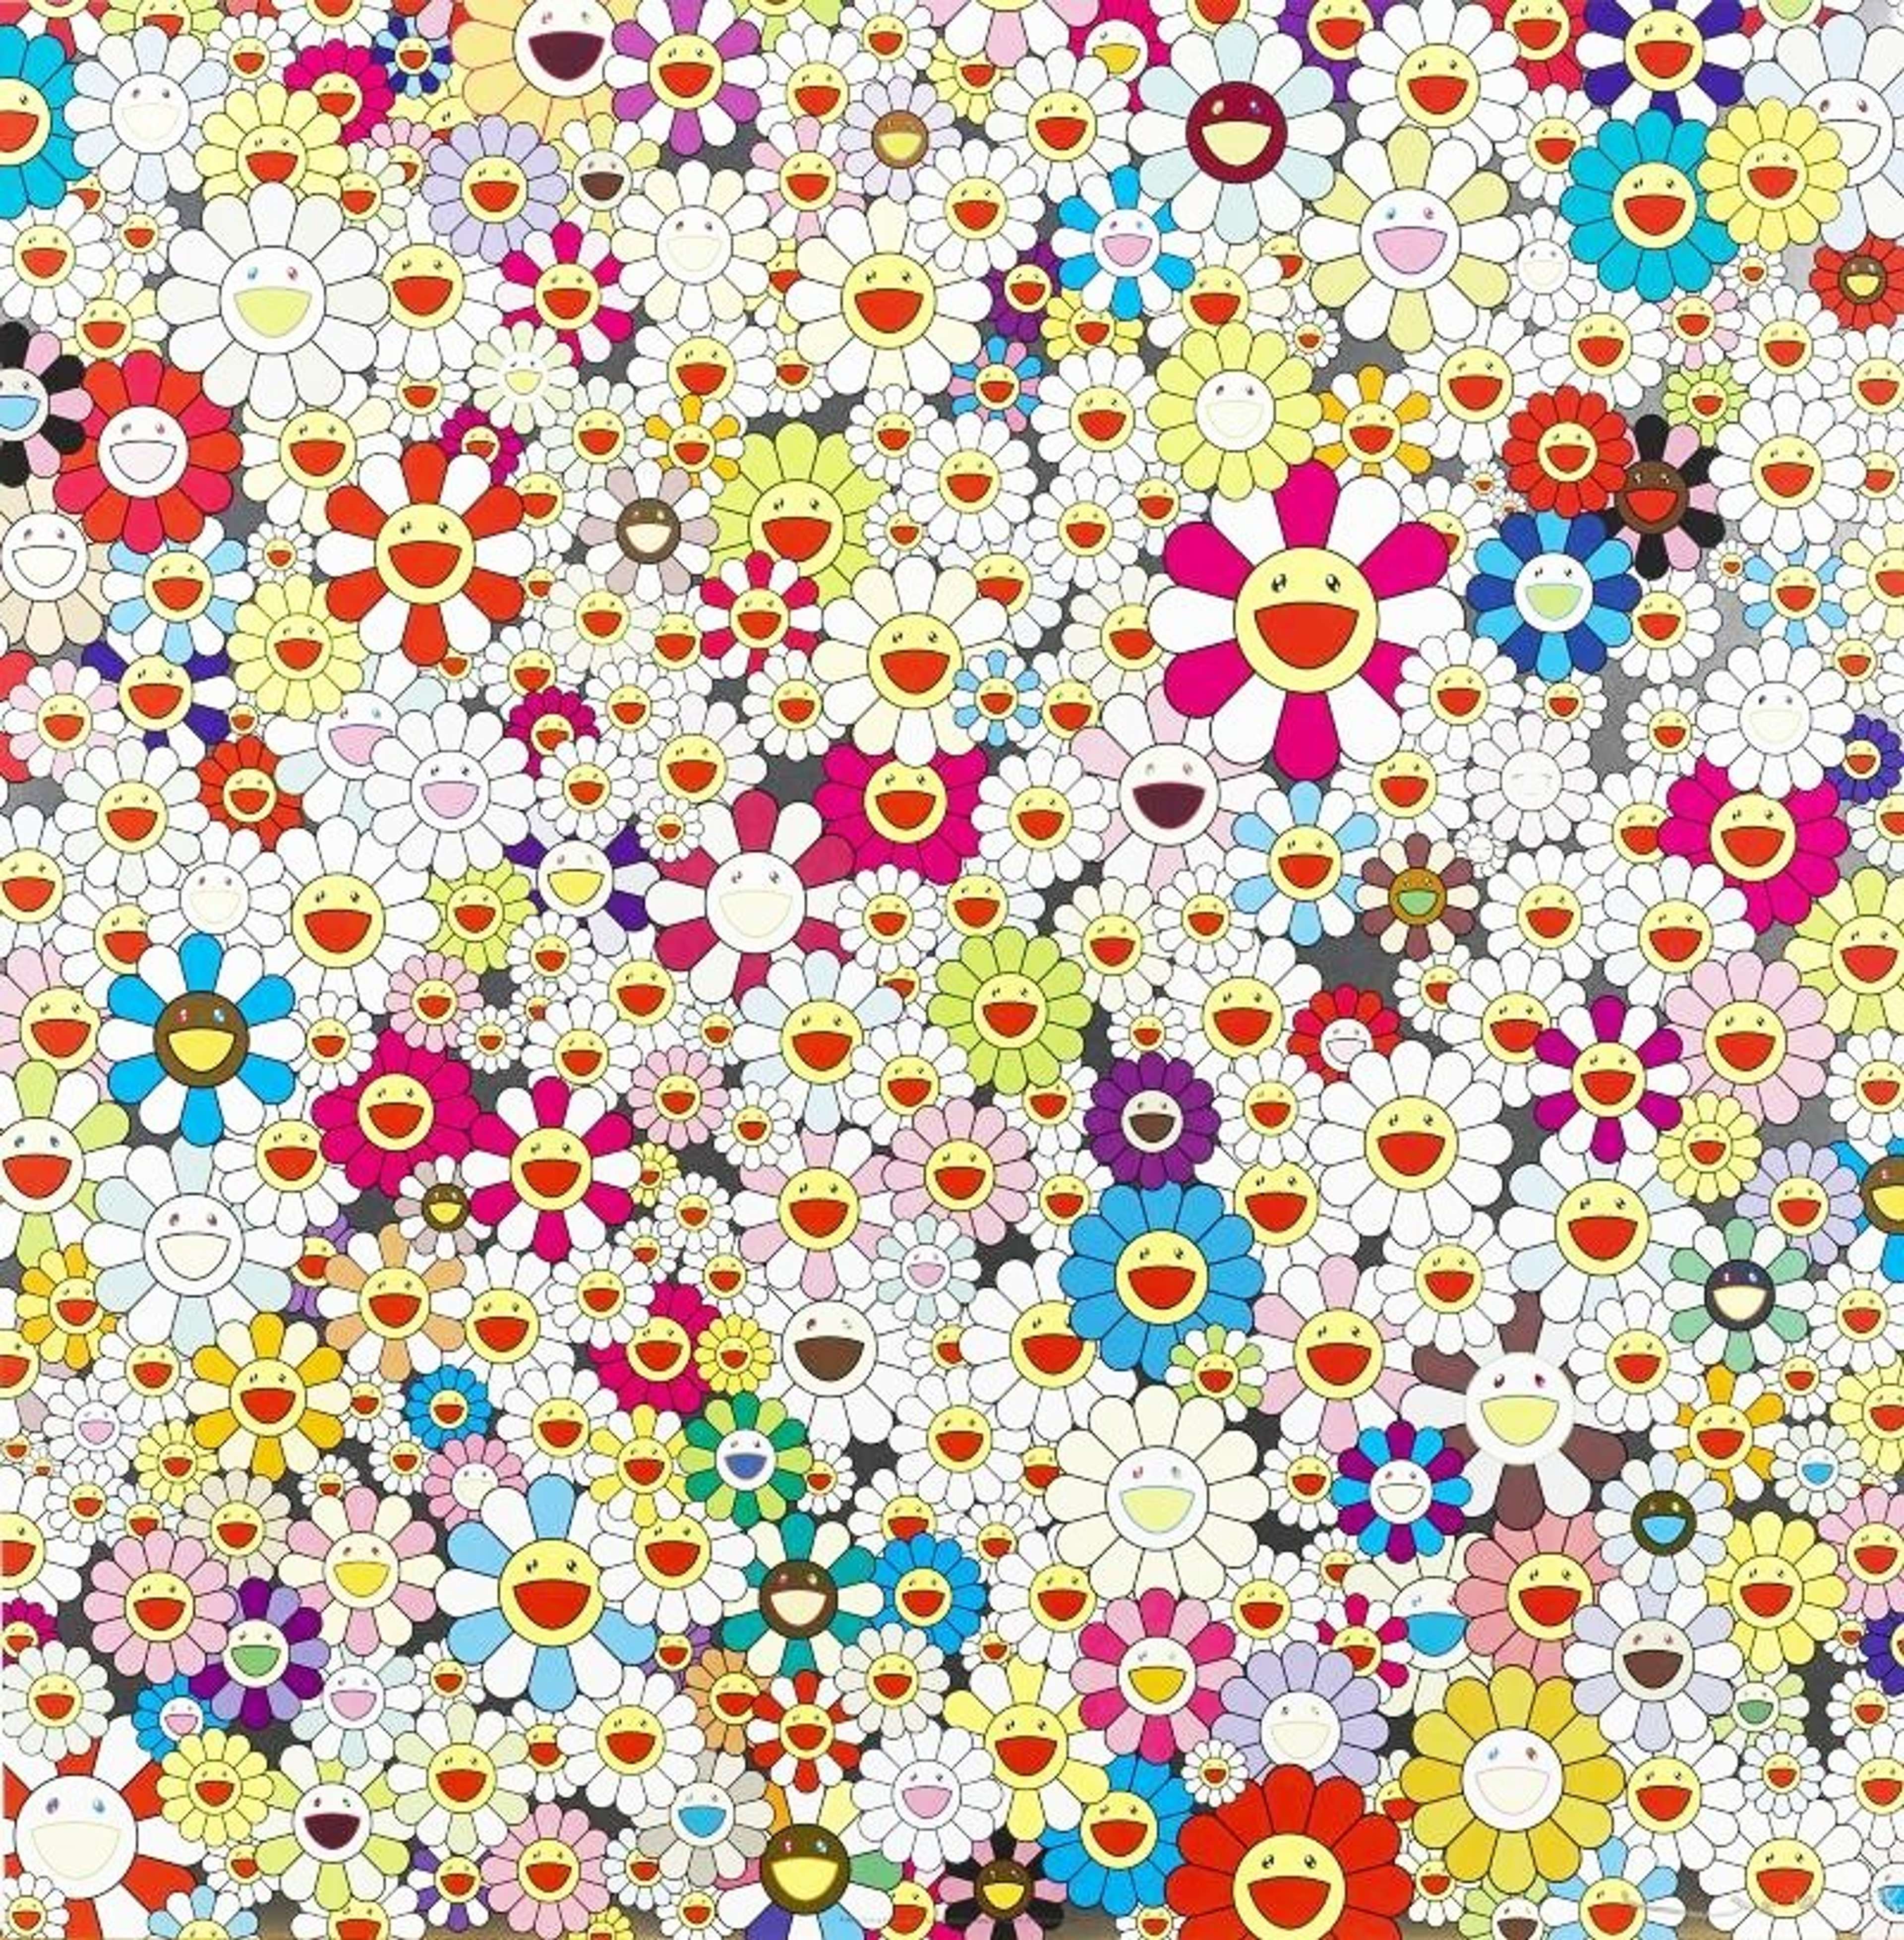 Field Of Smiling Flowers by Takashi Murakami